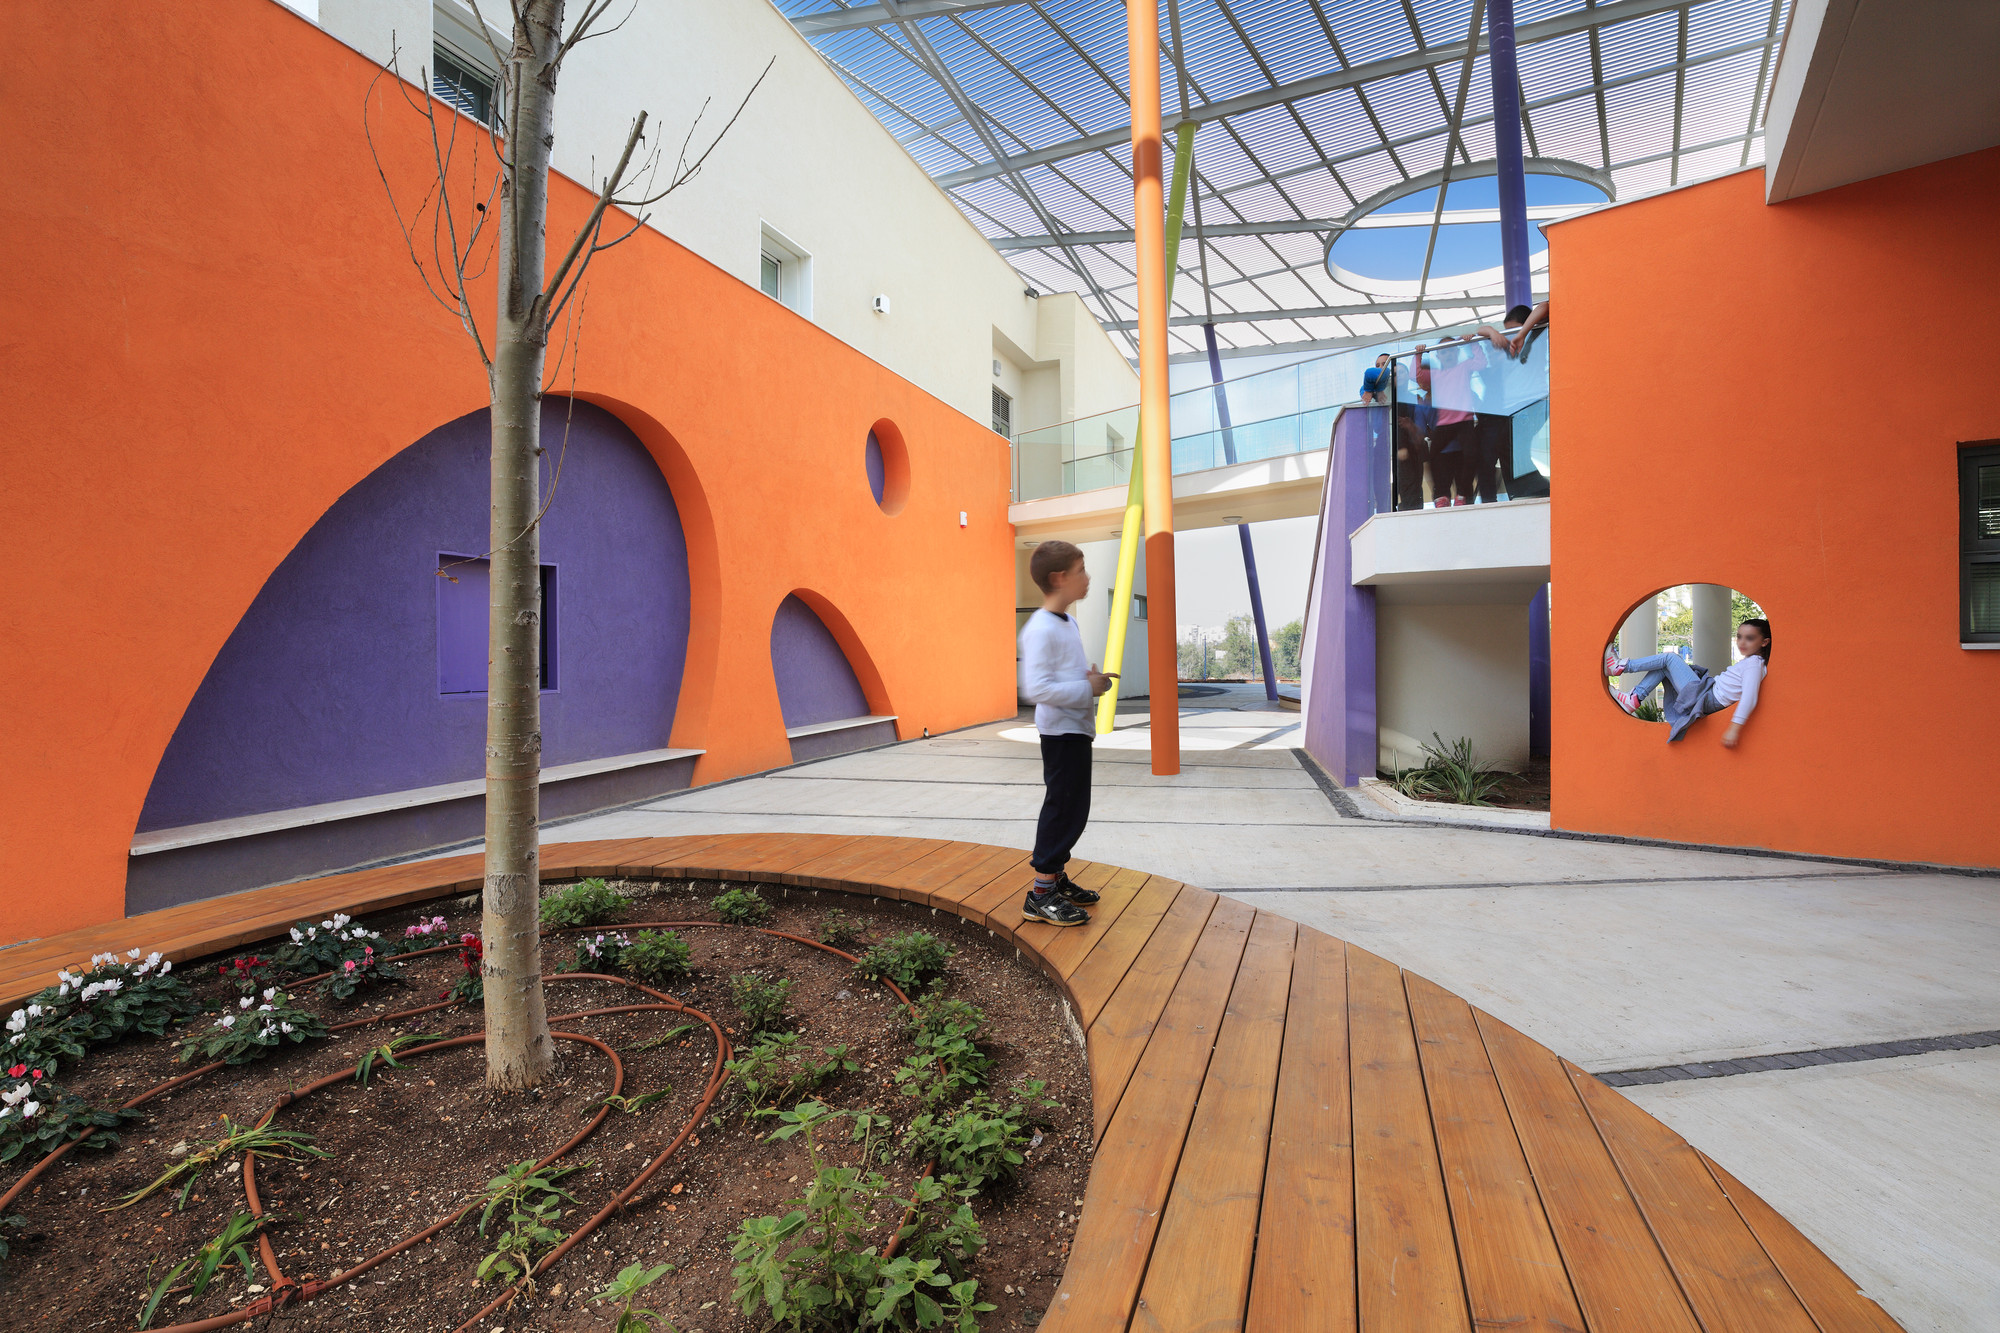 Landscape Design for Educational Buildings